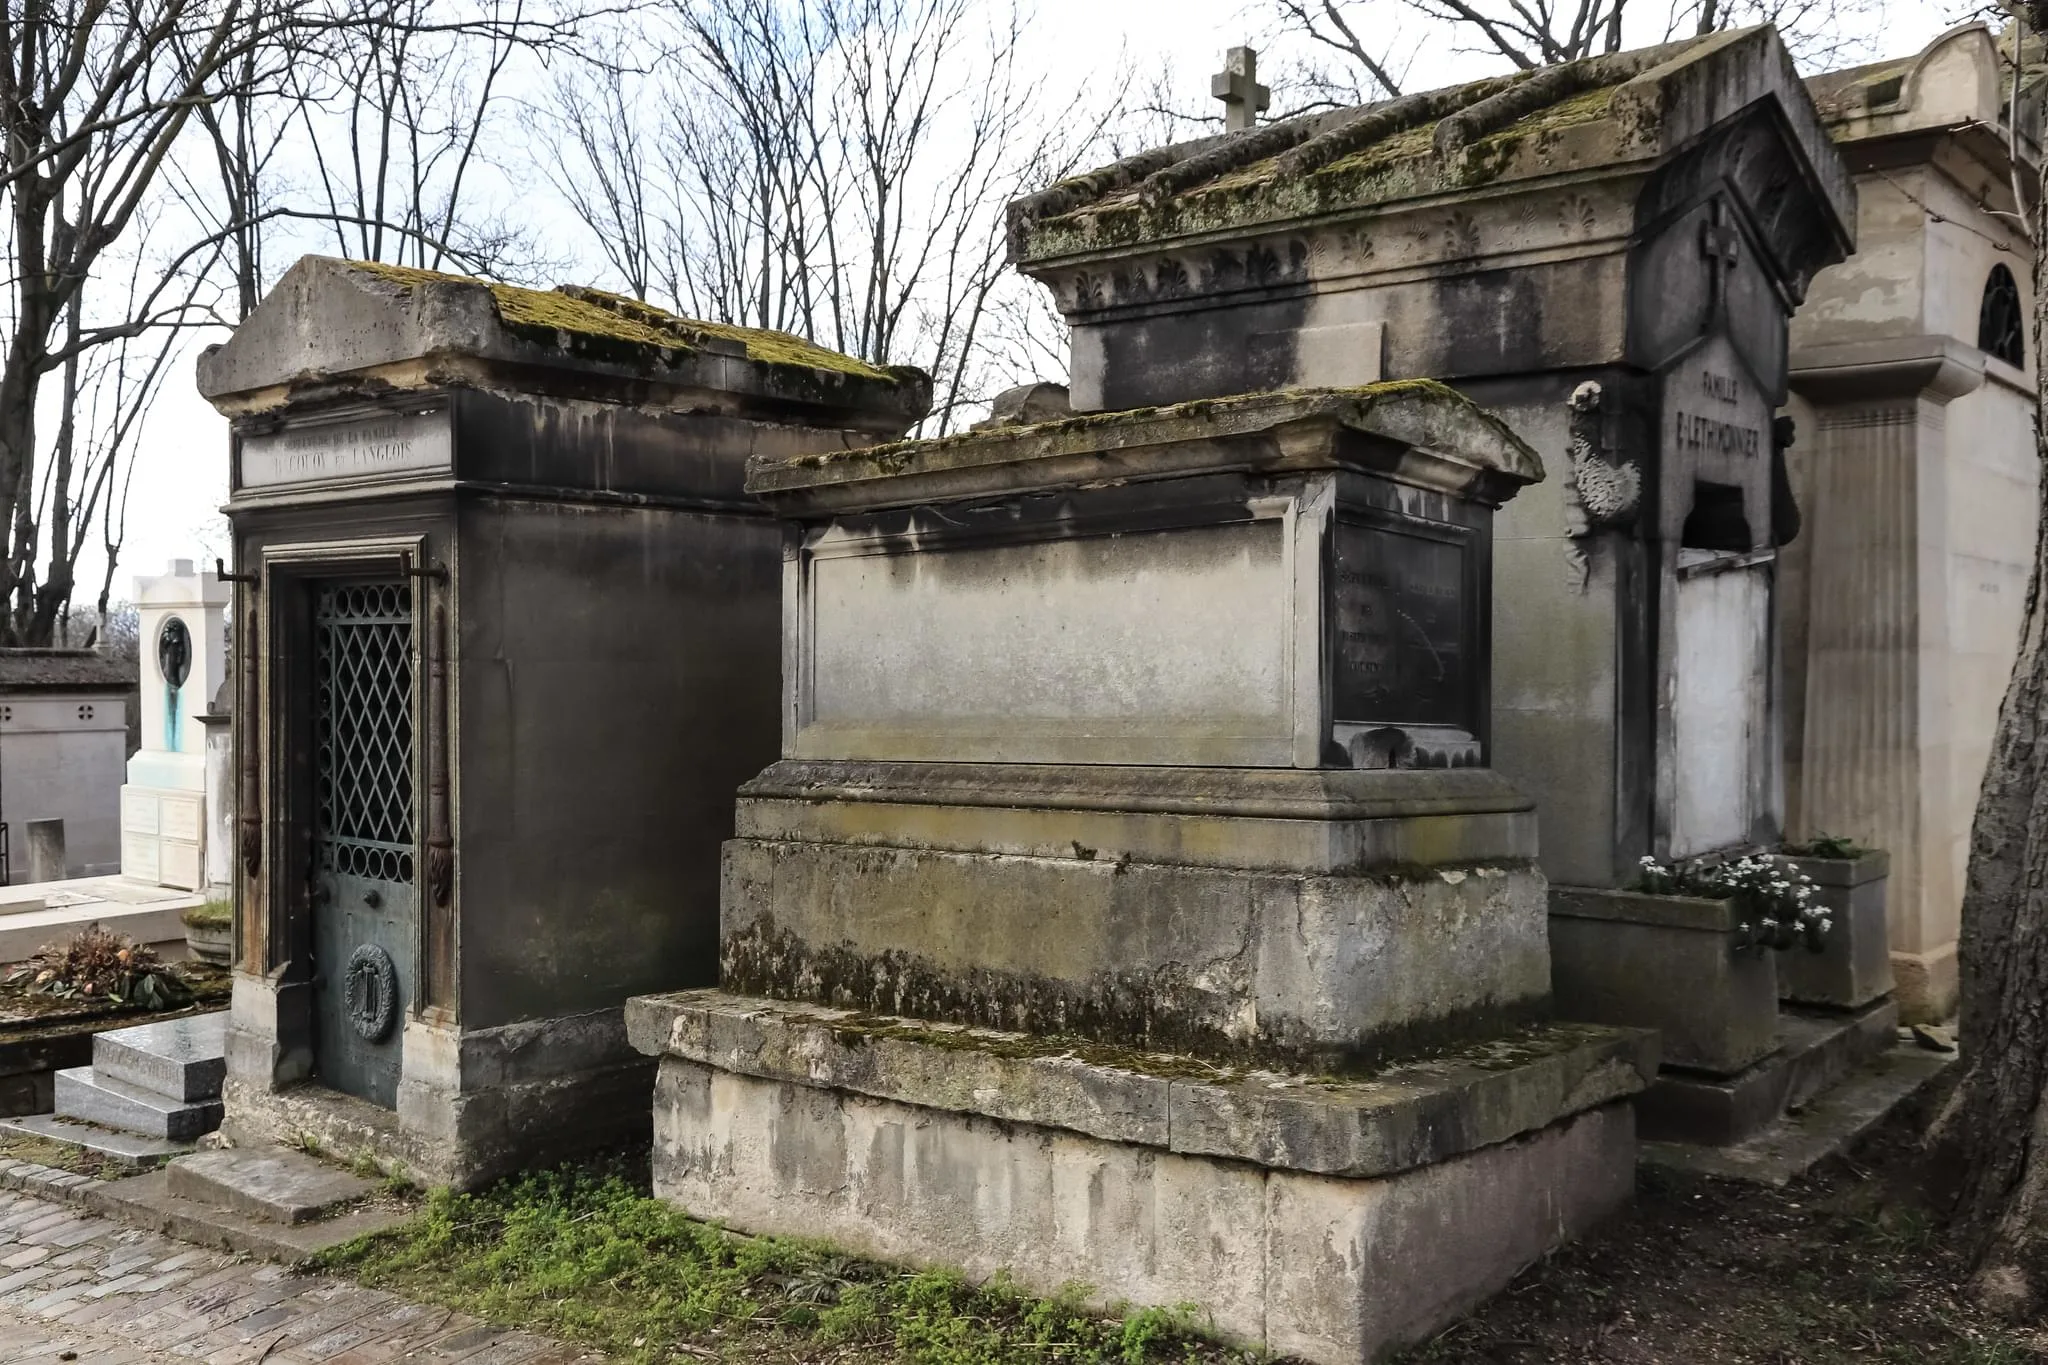 647 photos of Antique Tombs, Mausoleums and Burial Grounds